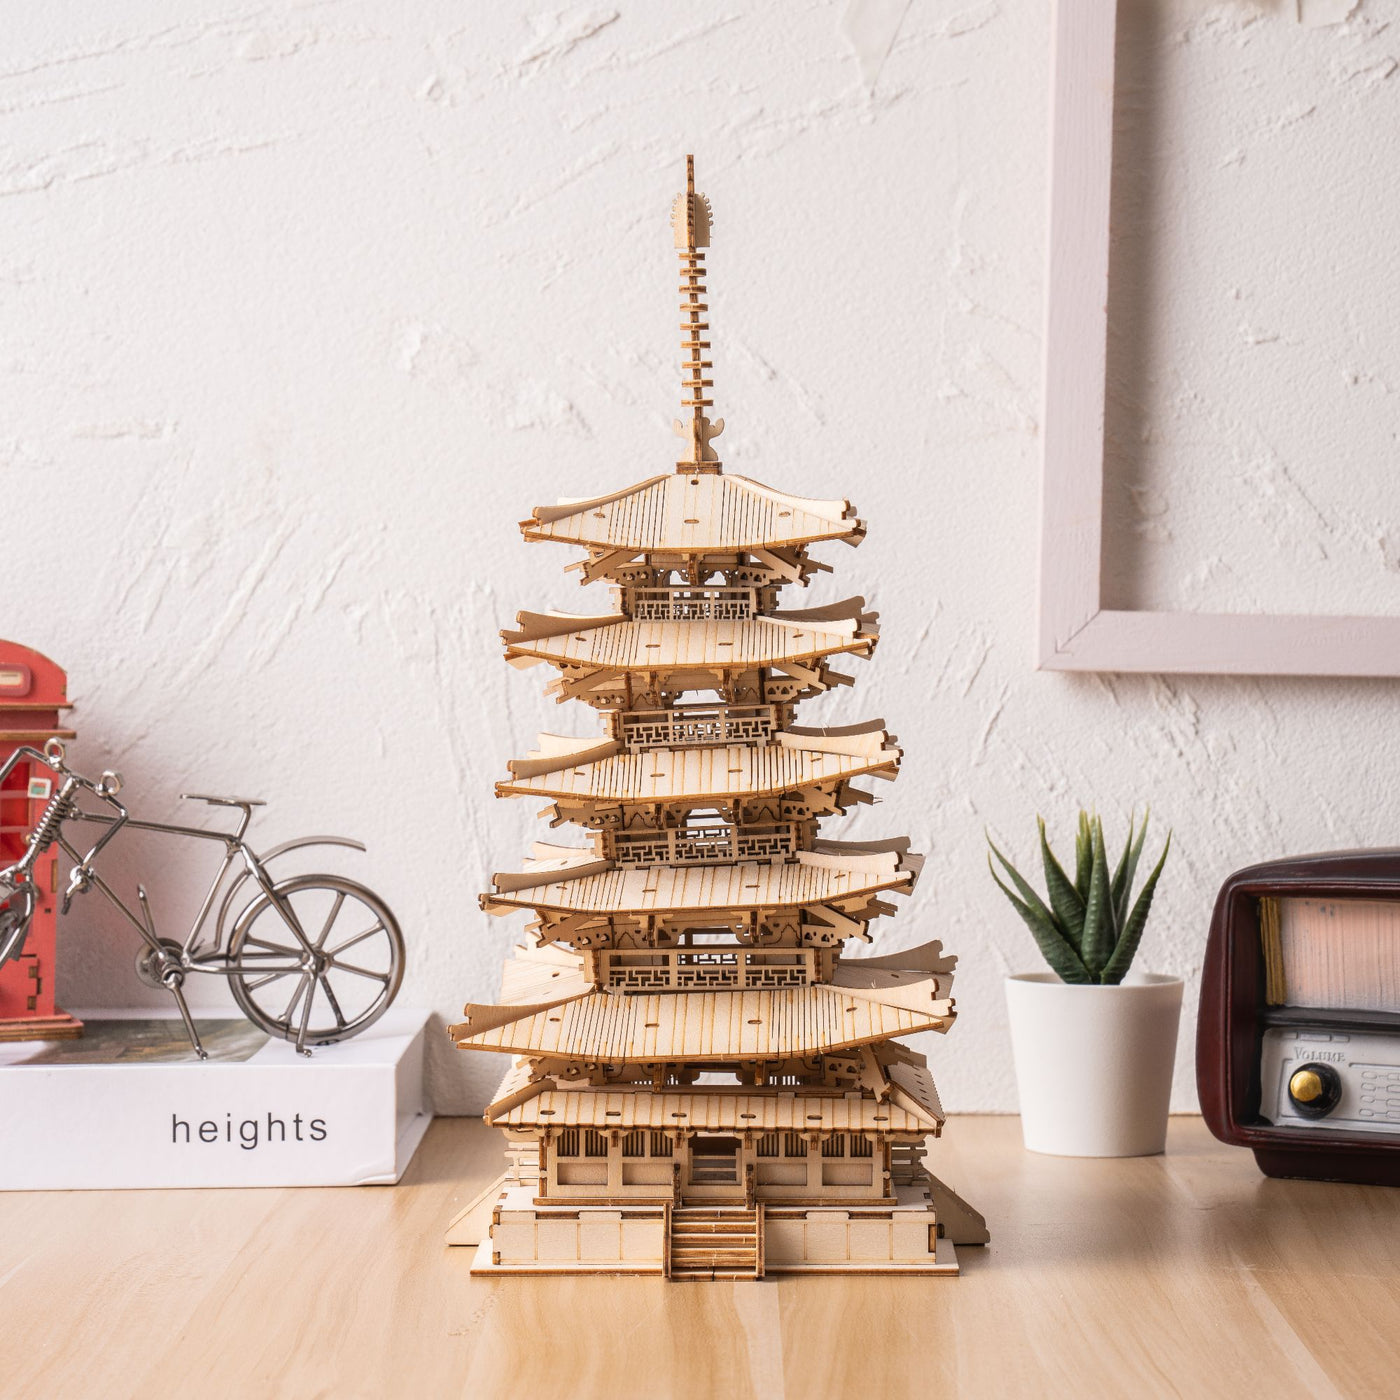 Rokrgeek Ancient Pagoda 3D Wooden Puzzle